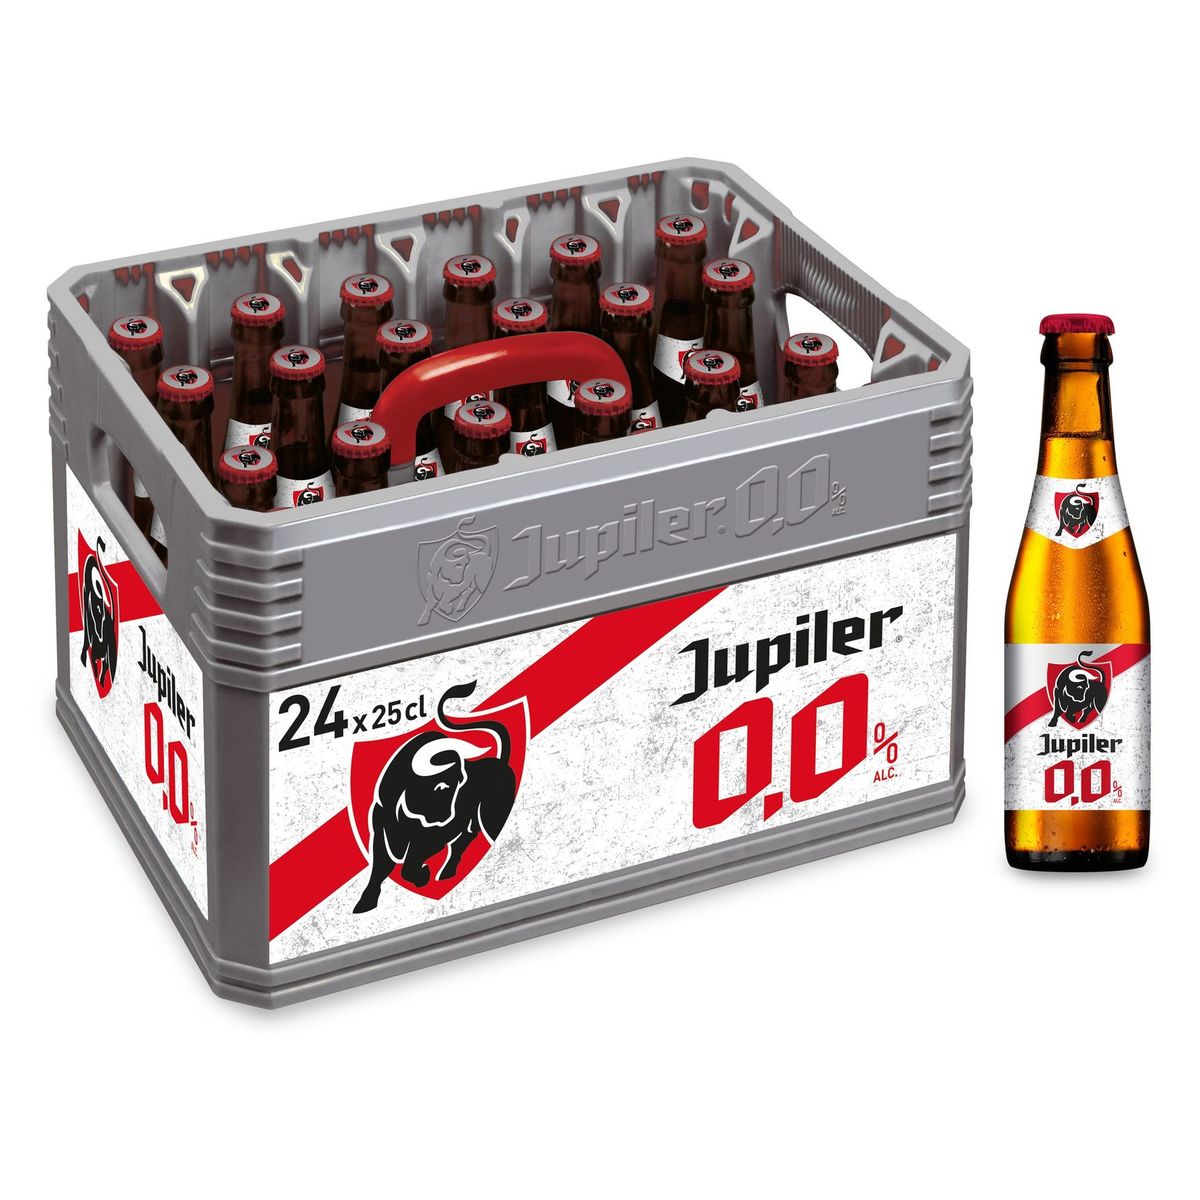 Jupiler 0.0% Alc. Beer Caisse 24 x 25 cl